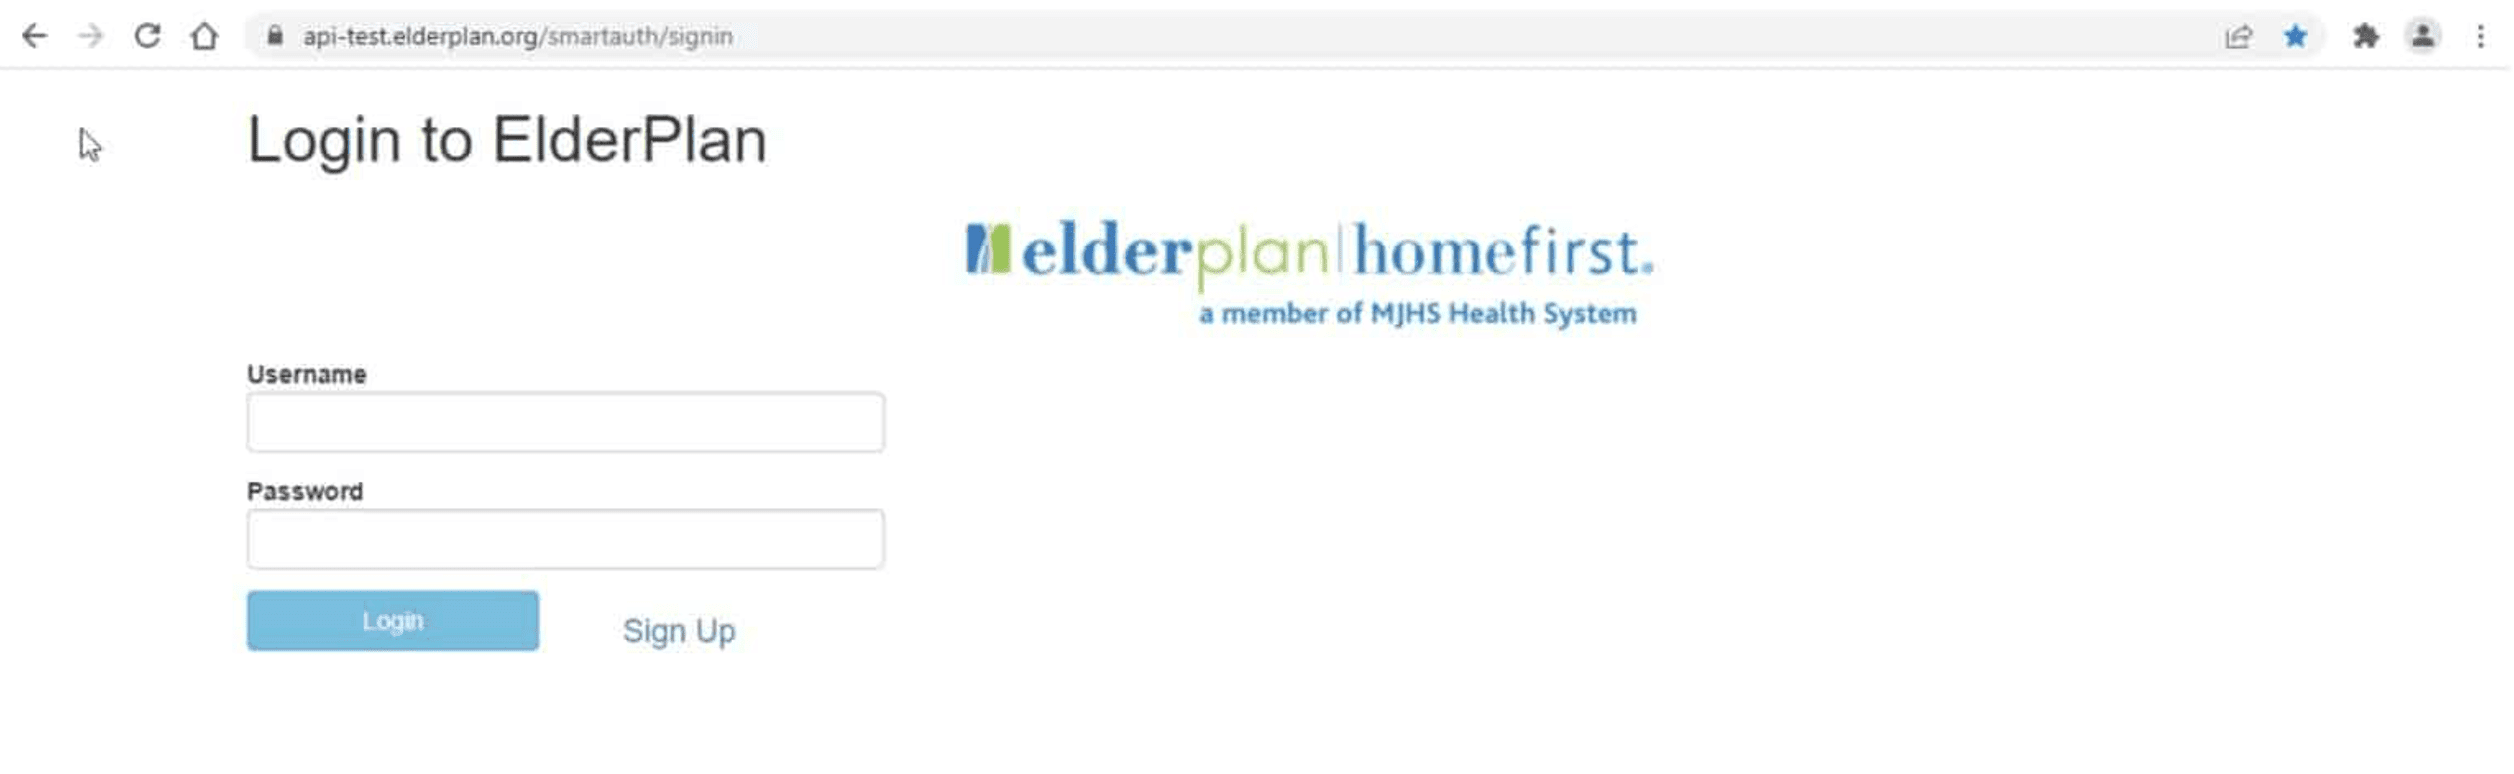 Sign up screen for Elderplan account registration